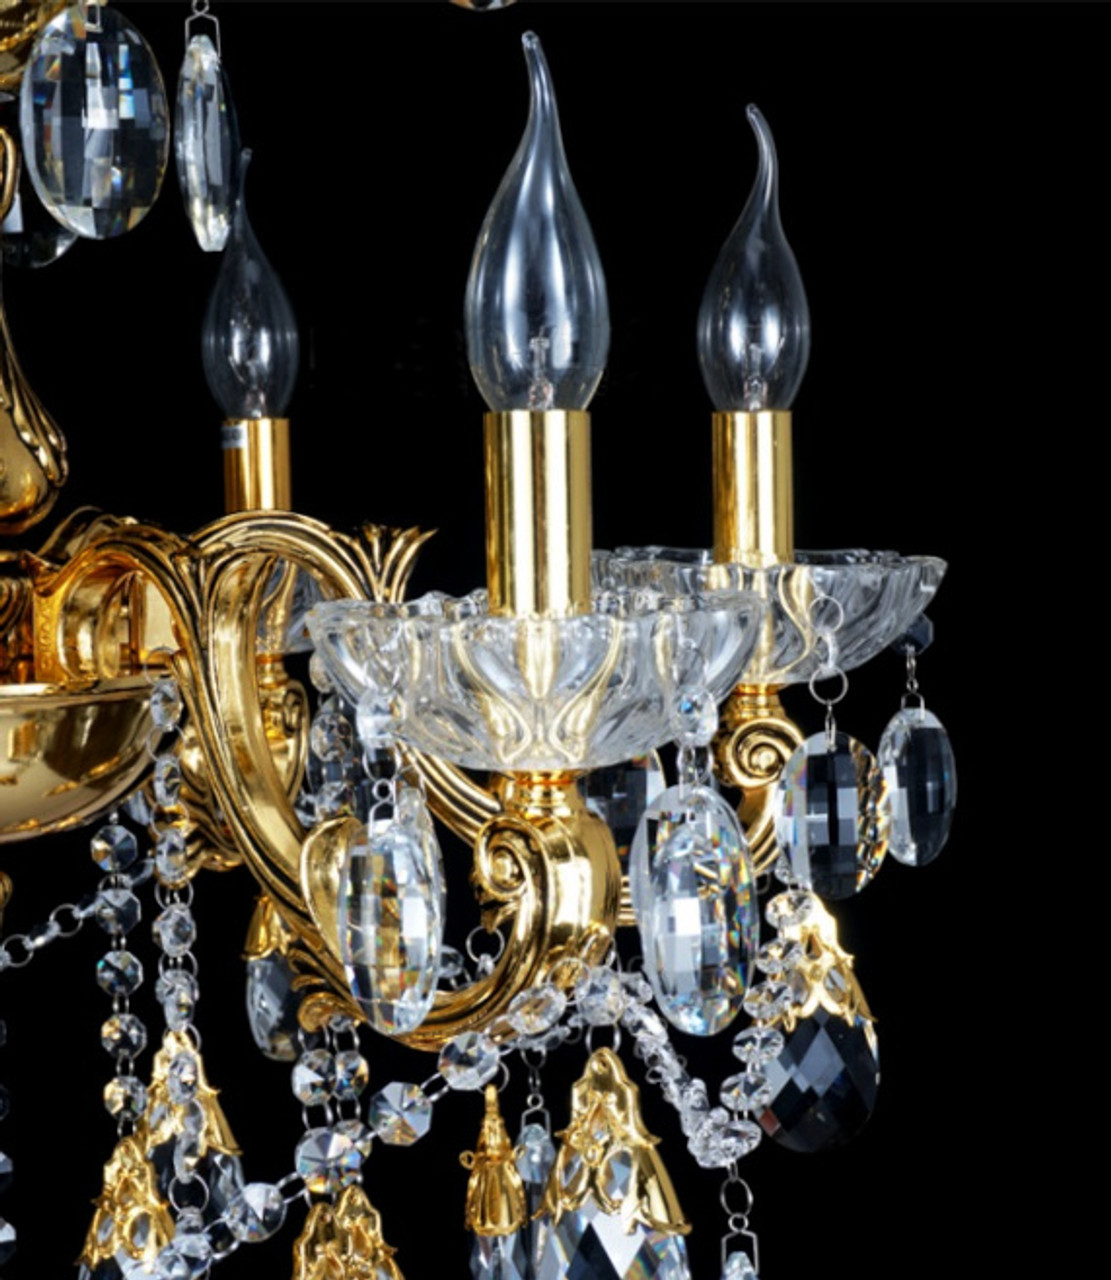 Minimal vintage brass chandelier with 8 branches